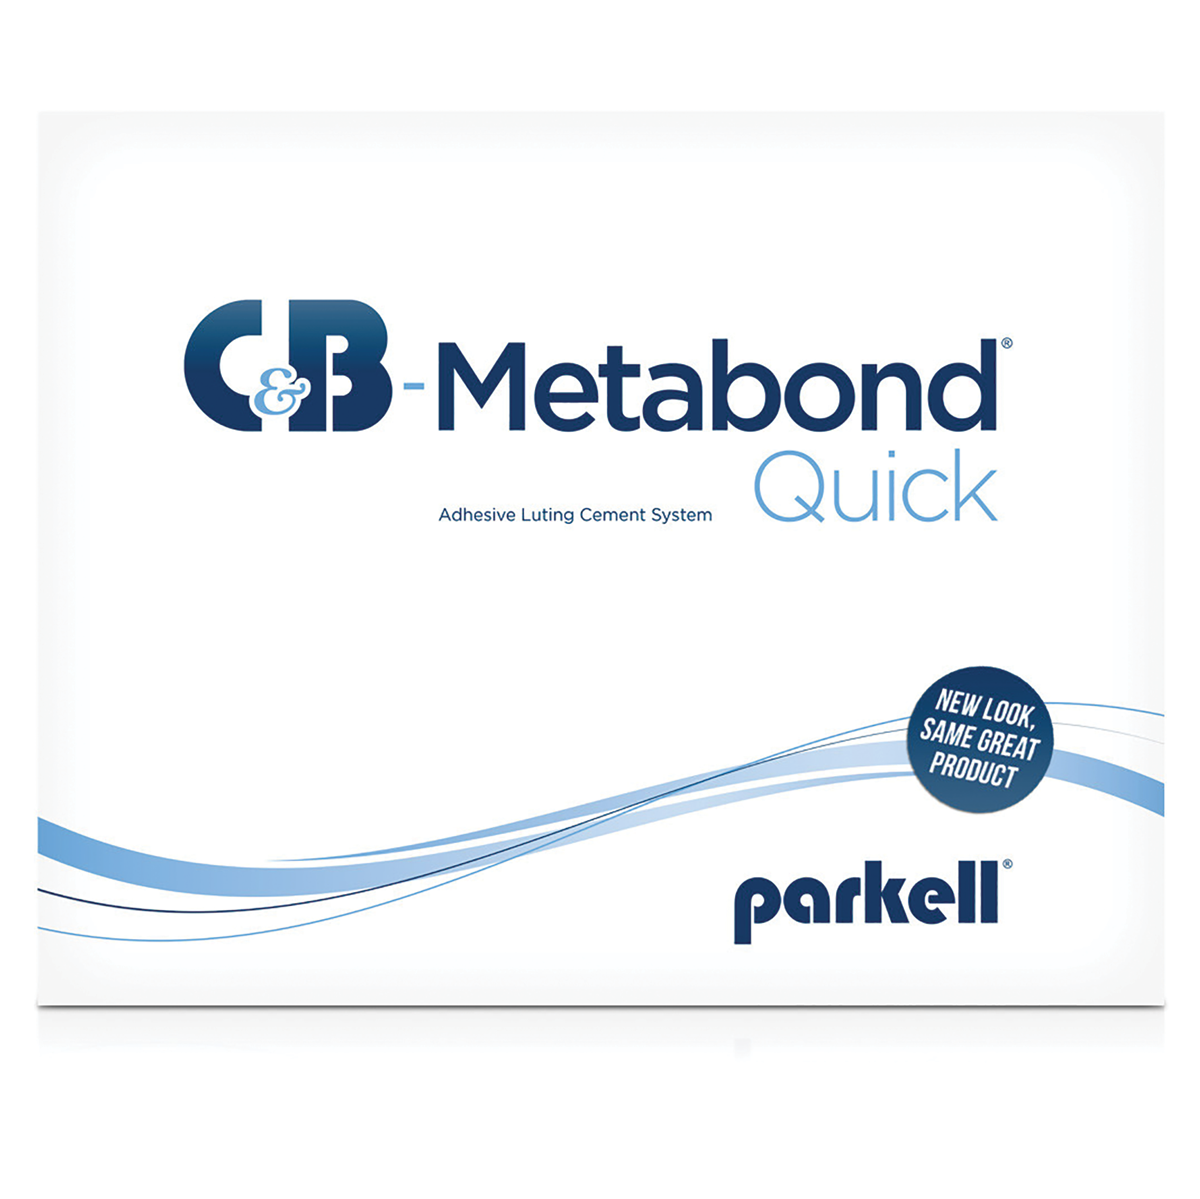 Parkell C&B Metabond Quick! Cement System